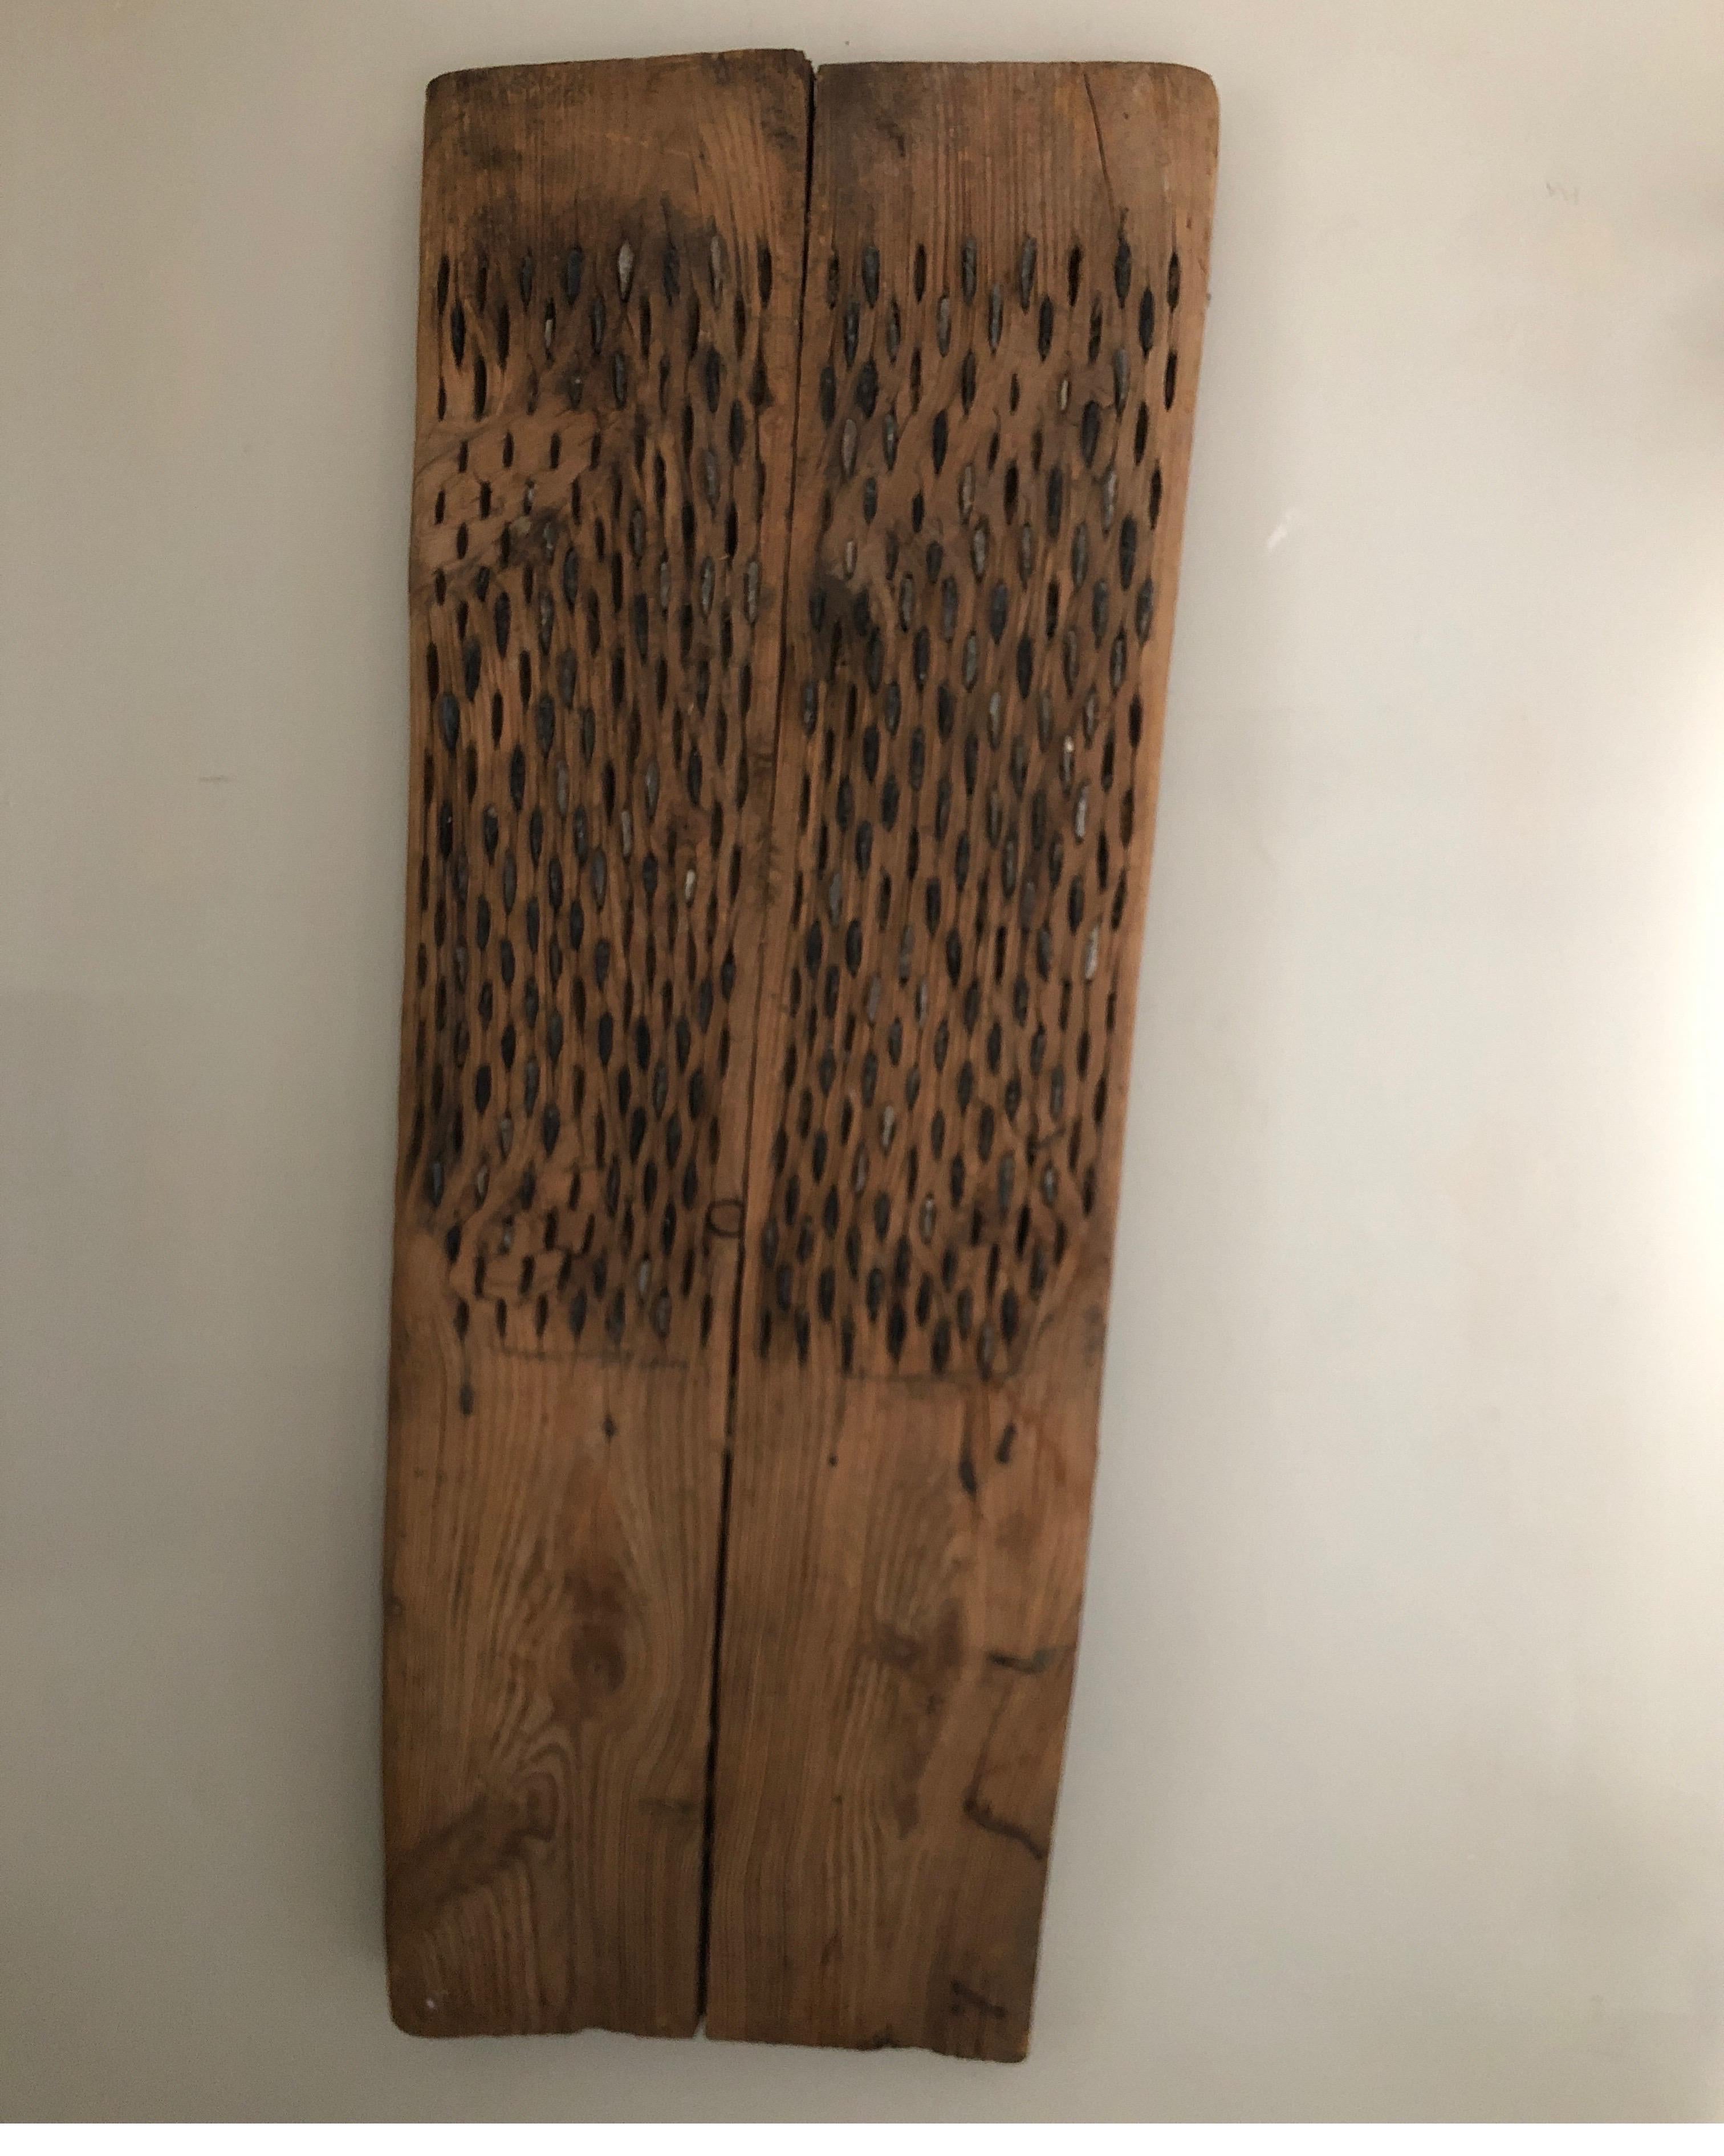 Primitive Turkish Wood and Stone Threshing Board For Sale 1